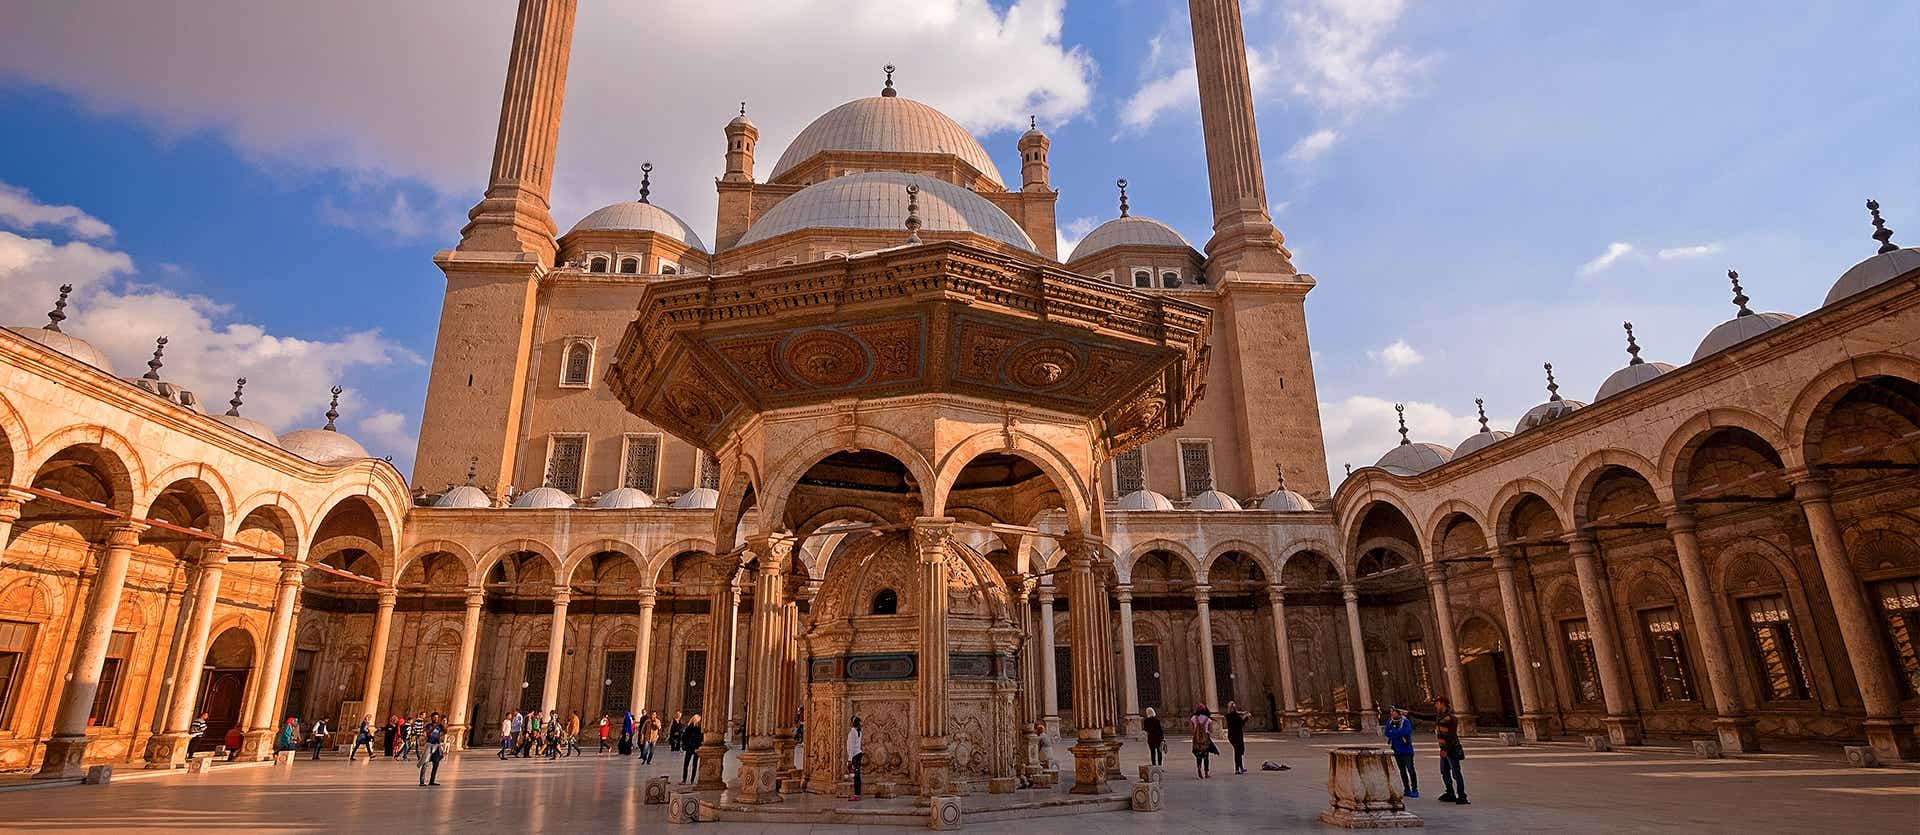 Mezquita de Alabastro <span class="iconos separador"></span> El Cairo <span class="iconos separador"></span> Egipto